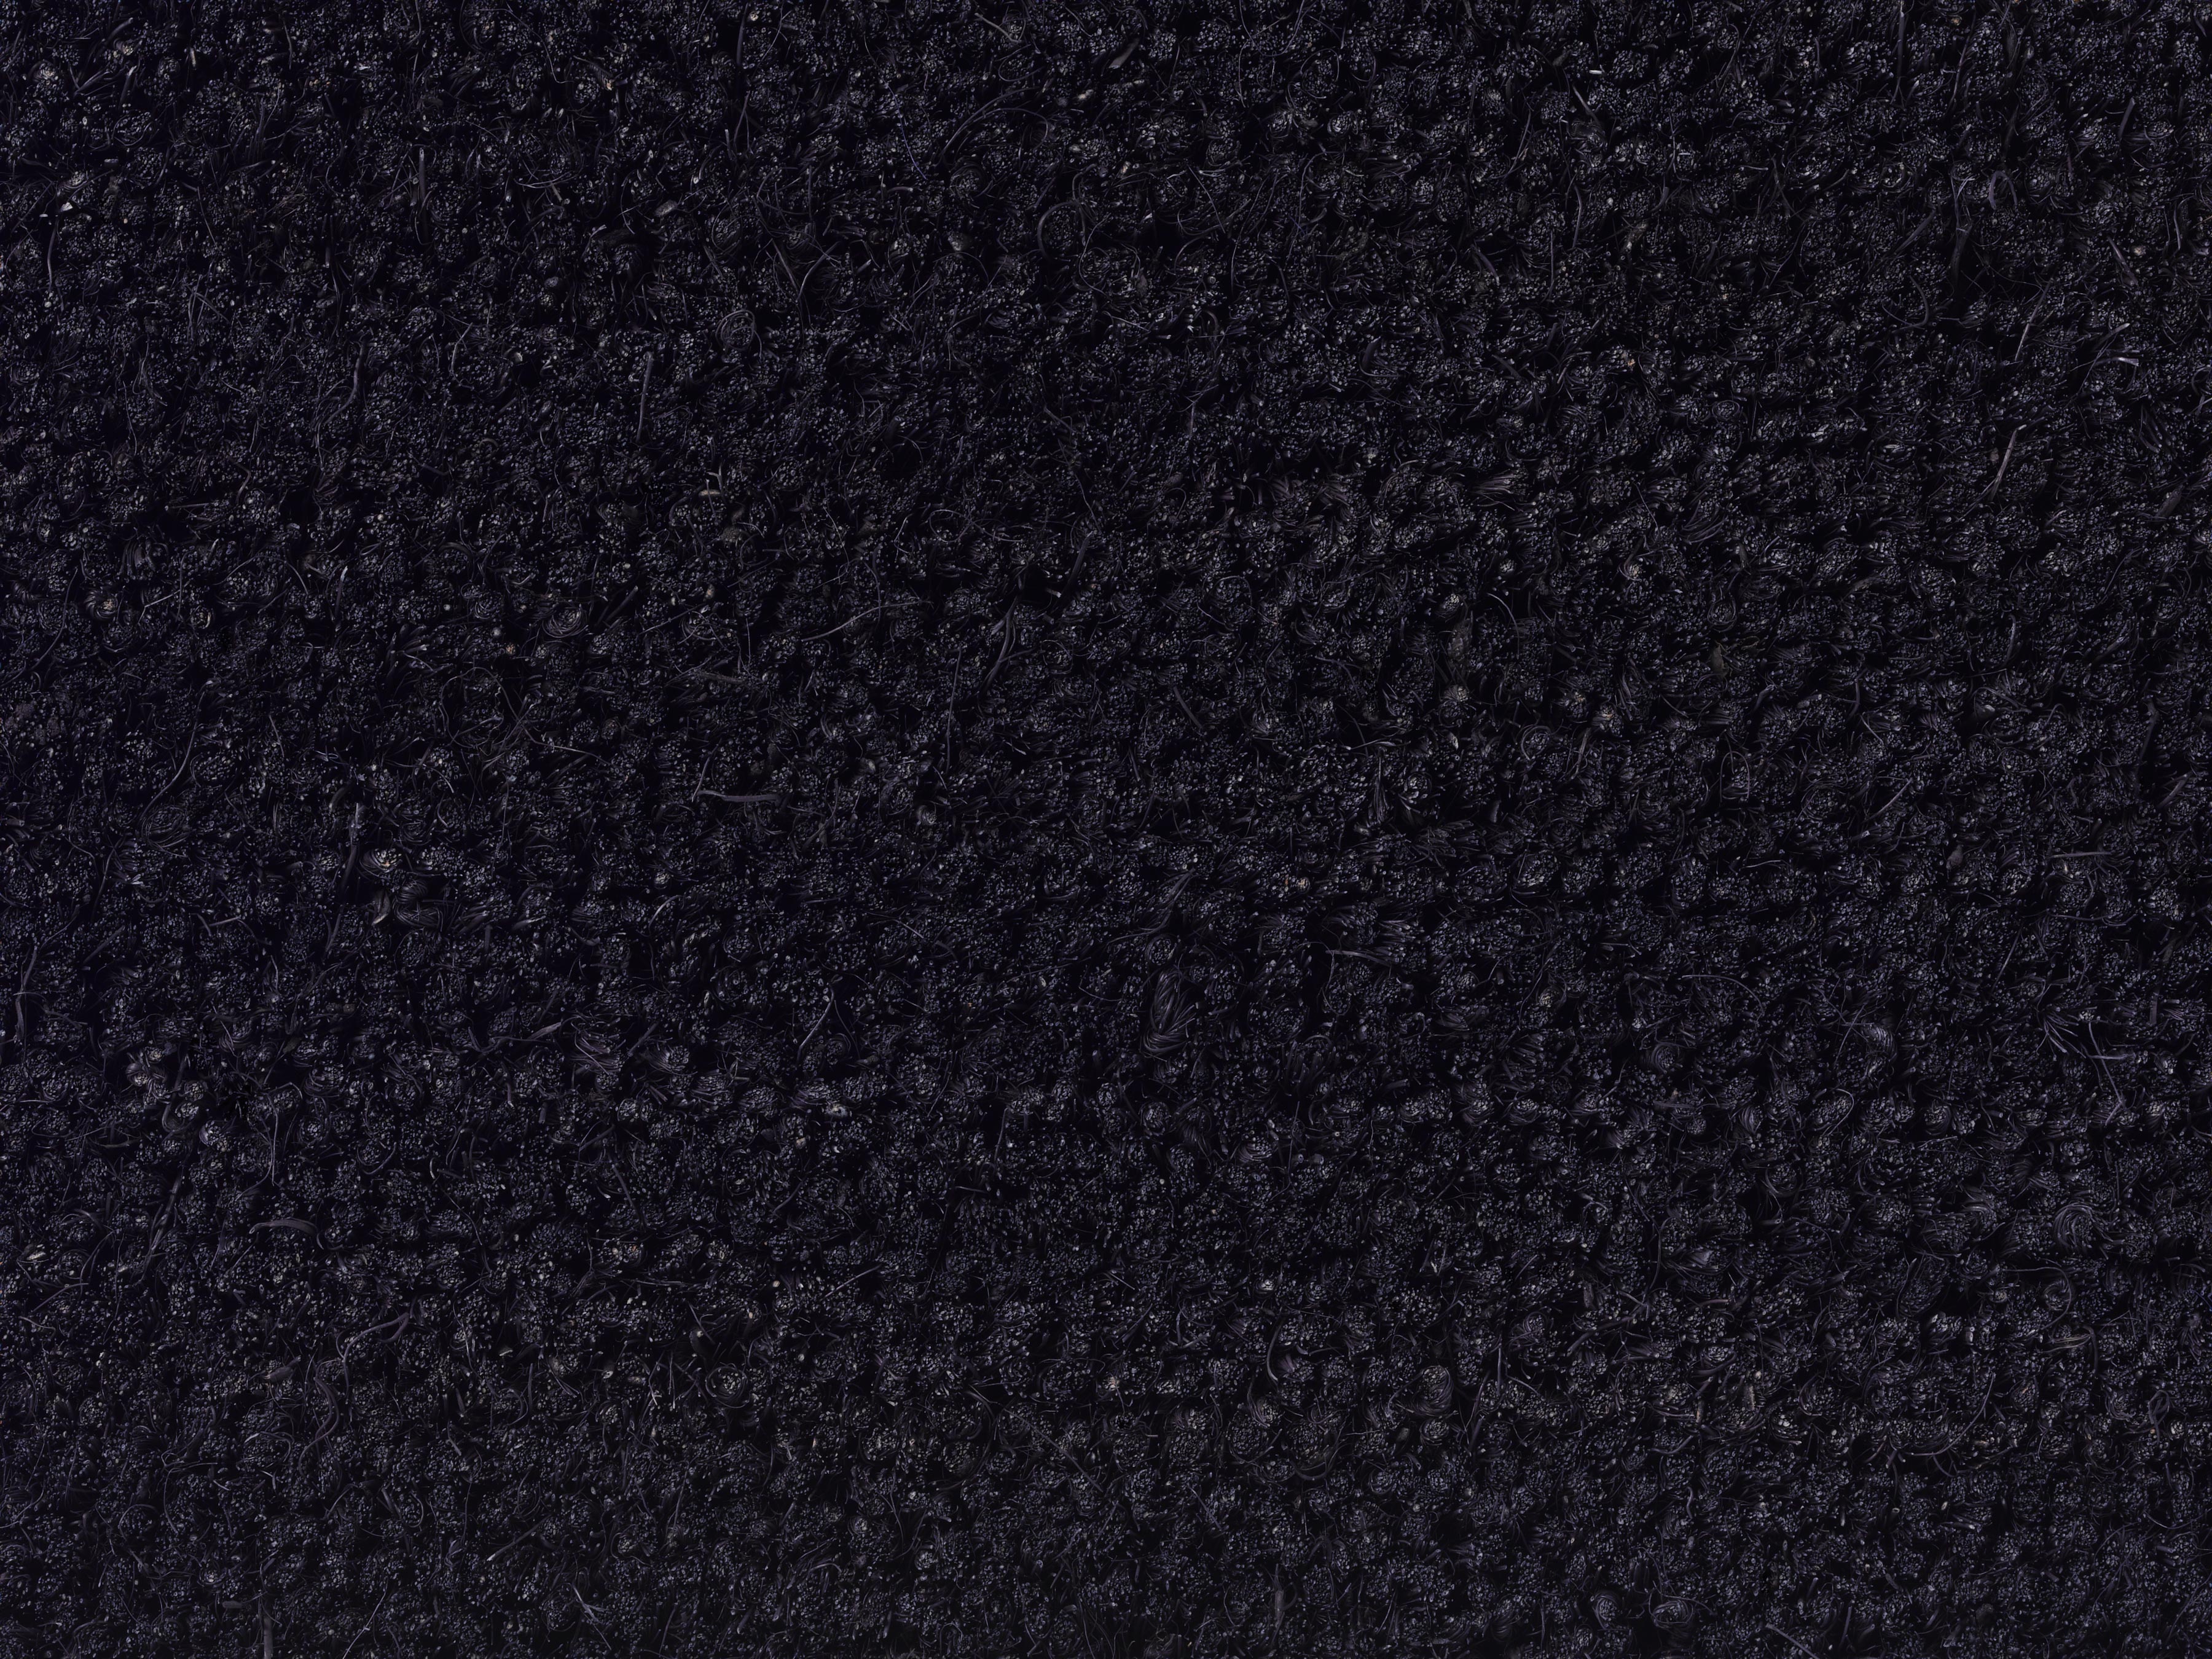 Kokosbosse III Rinotap 17 mm schwarzCoupon (Rolle) 200 cm breit